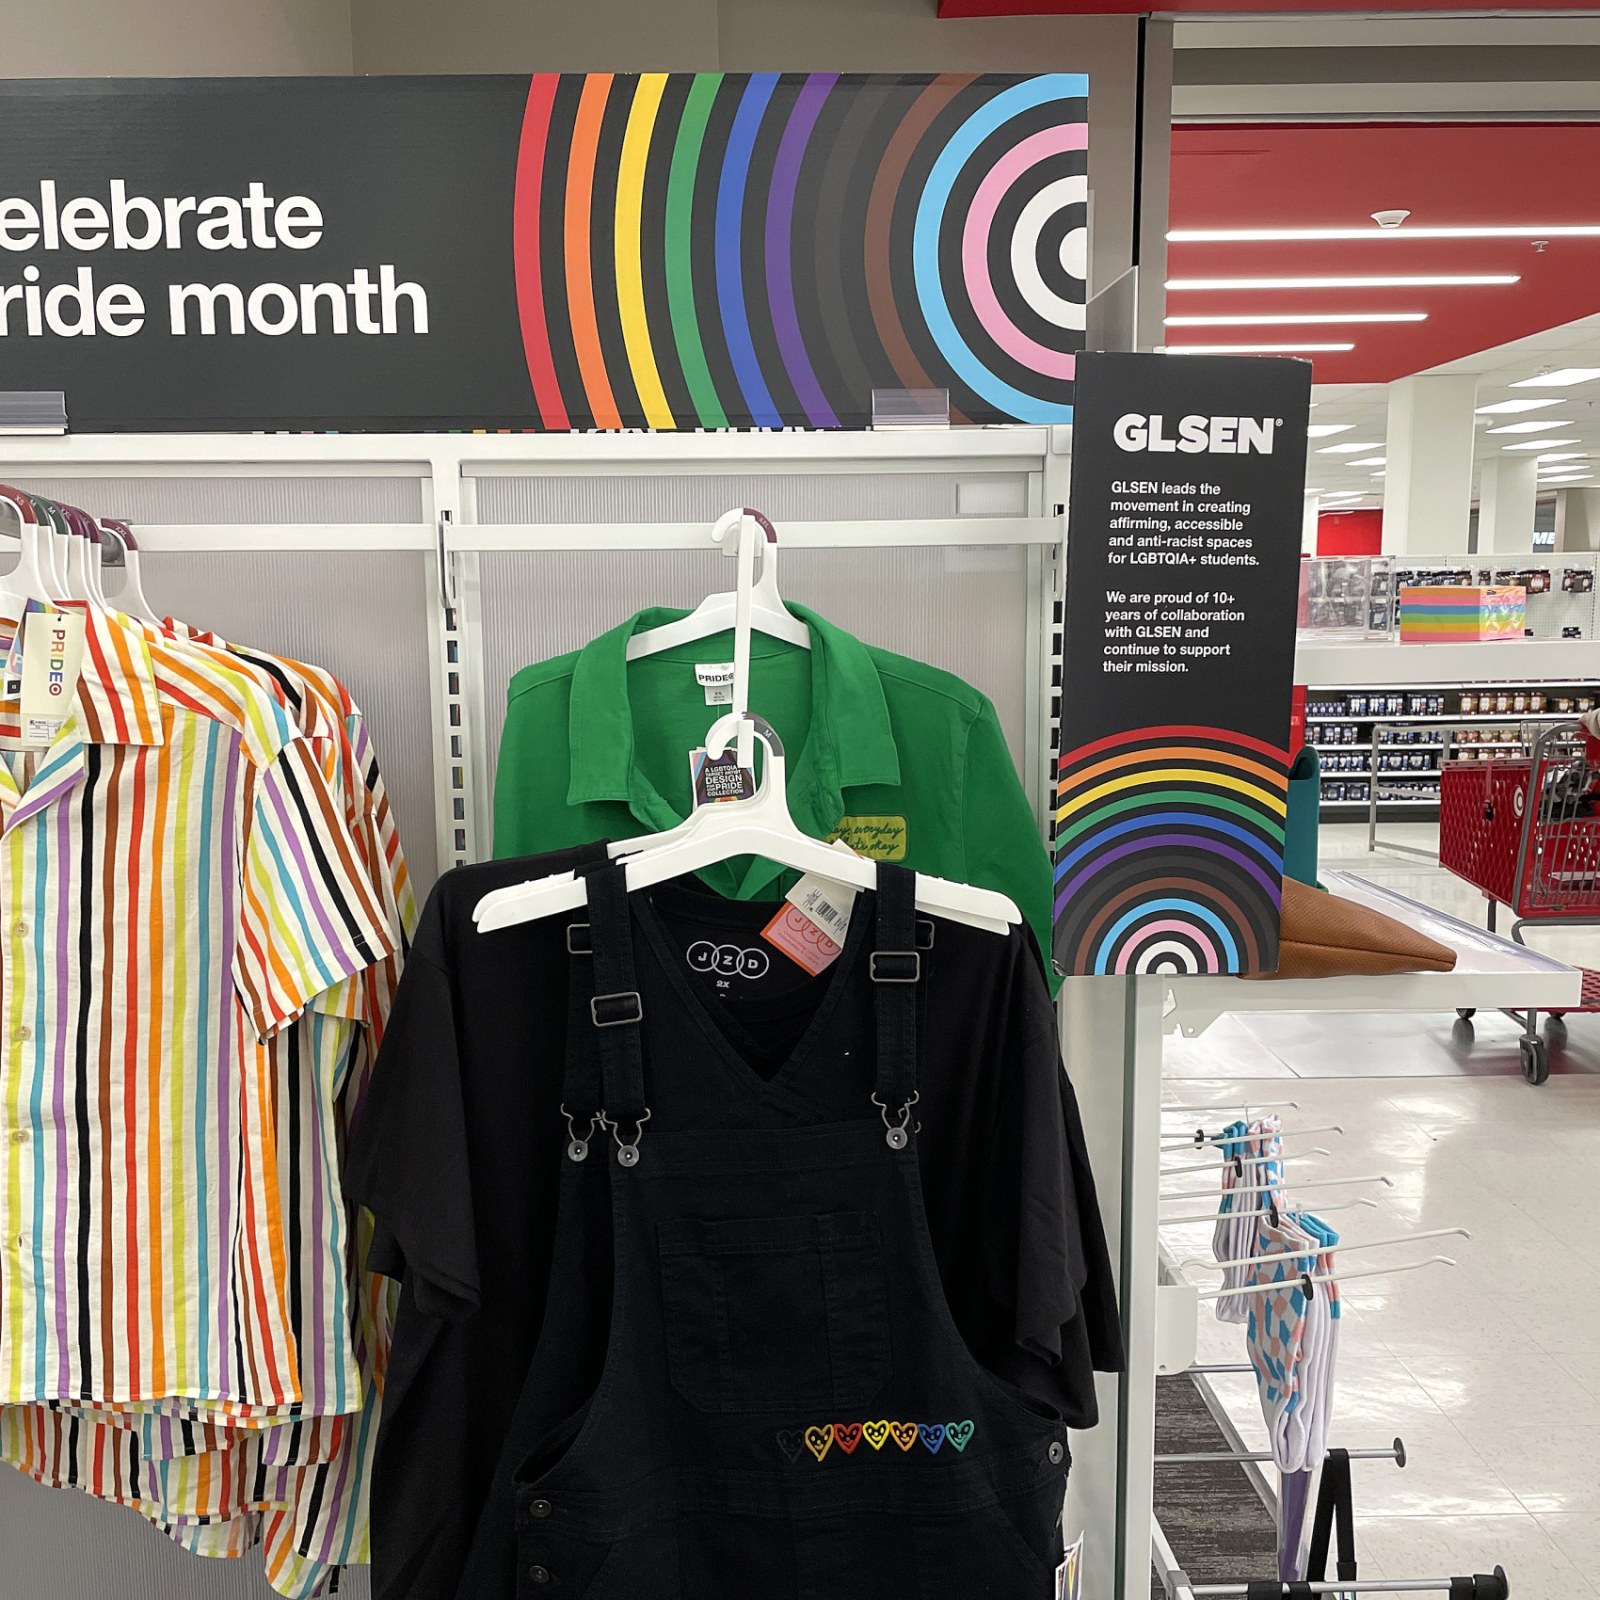 Target Pride Designer's 'Rainbow Capitalism' Swipe at Company: 'Dangerous